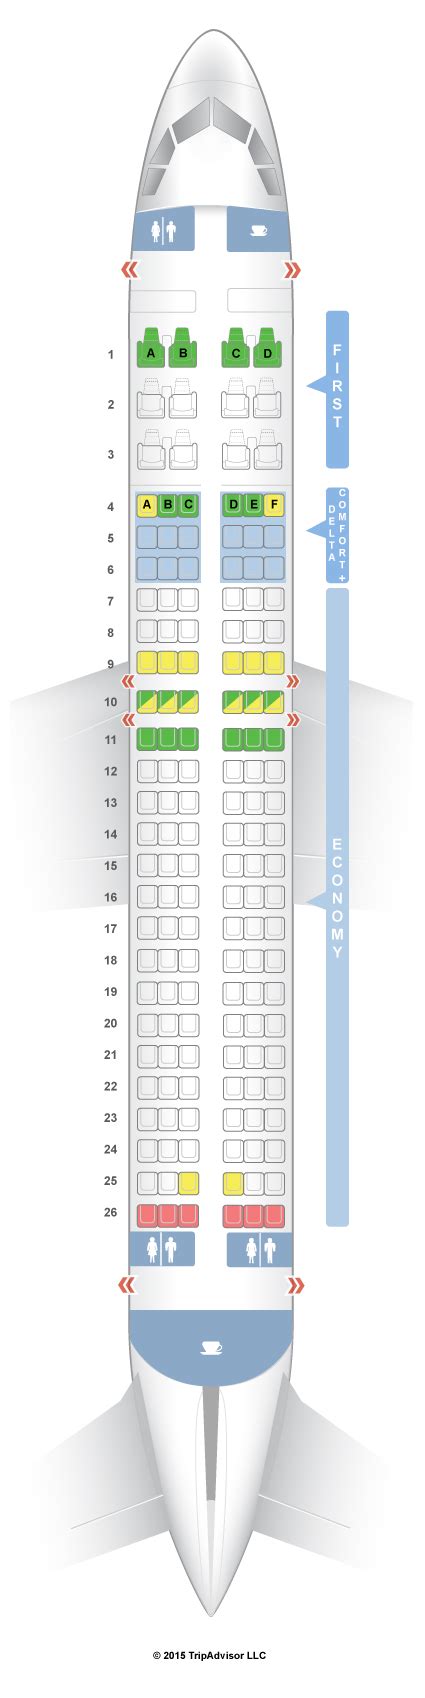 Seatguru Seat Map Delta Airbus A R V Free Download Nude Photo Gallery